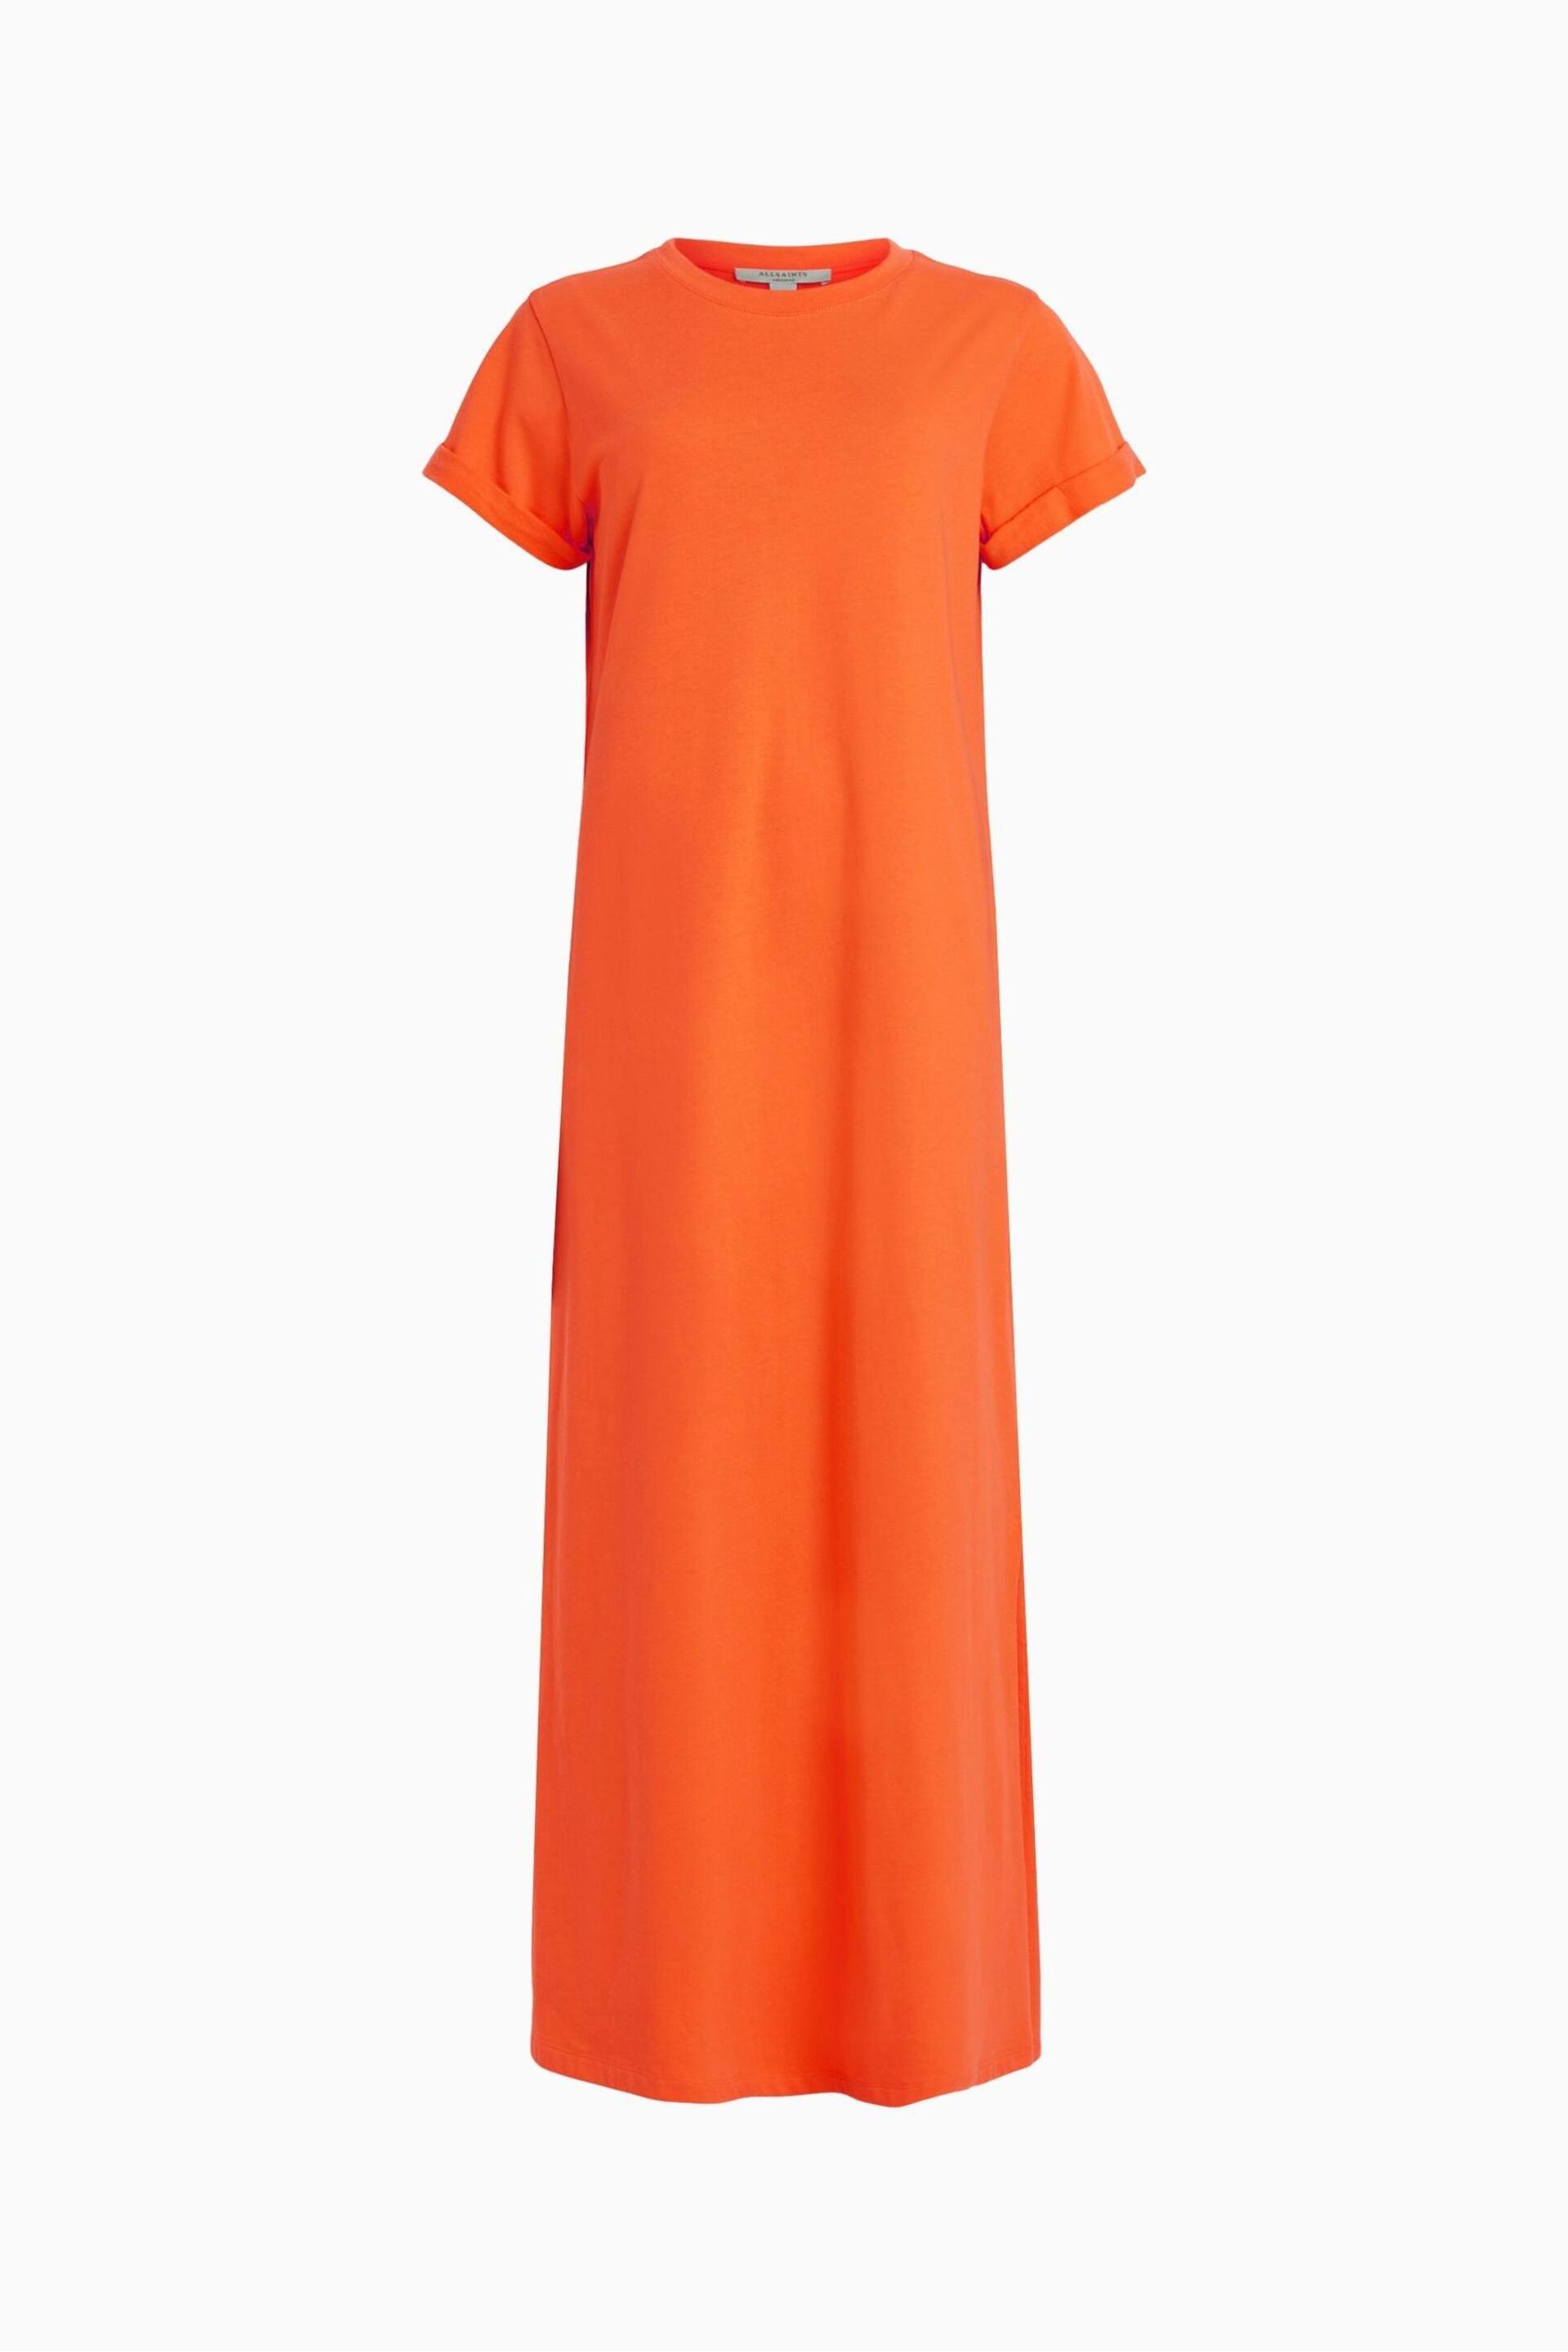 AllSaints Orange Anna Maxi Dress - Image 5 of 5